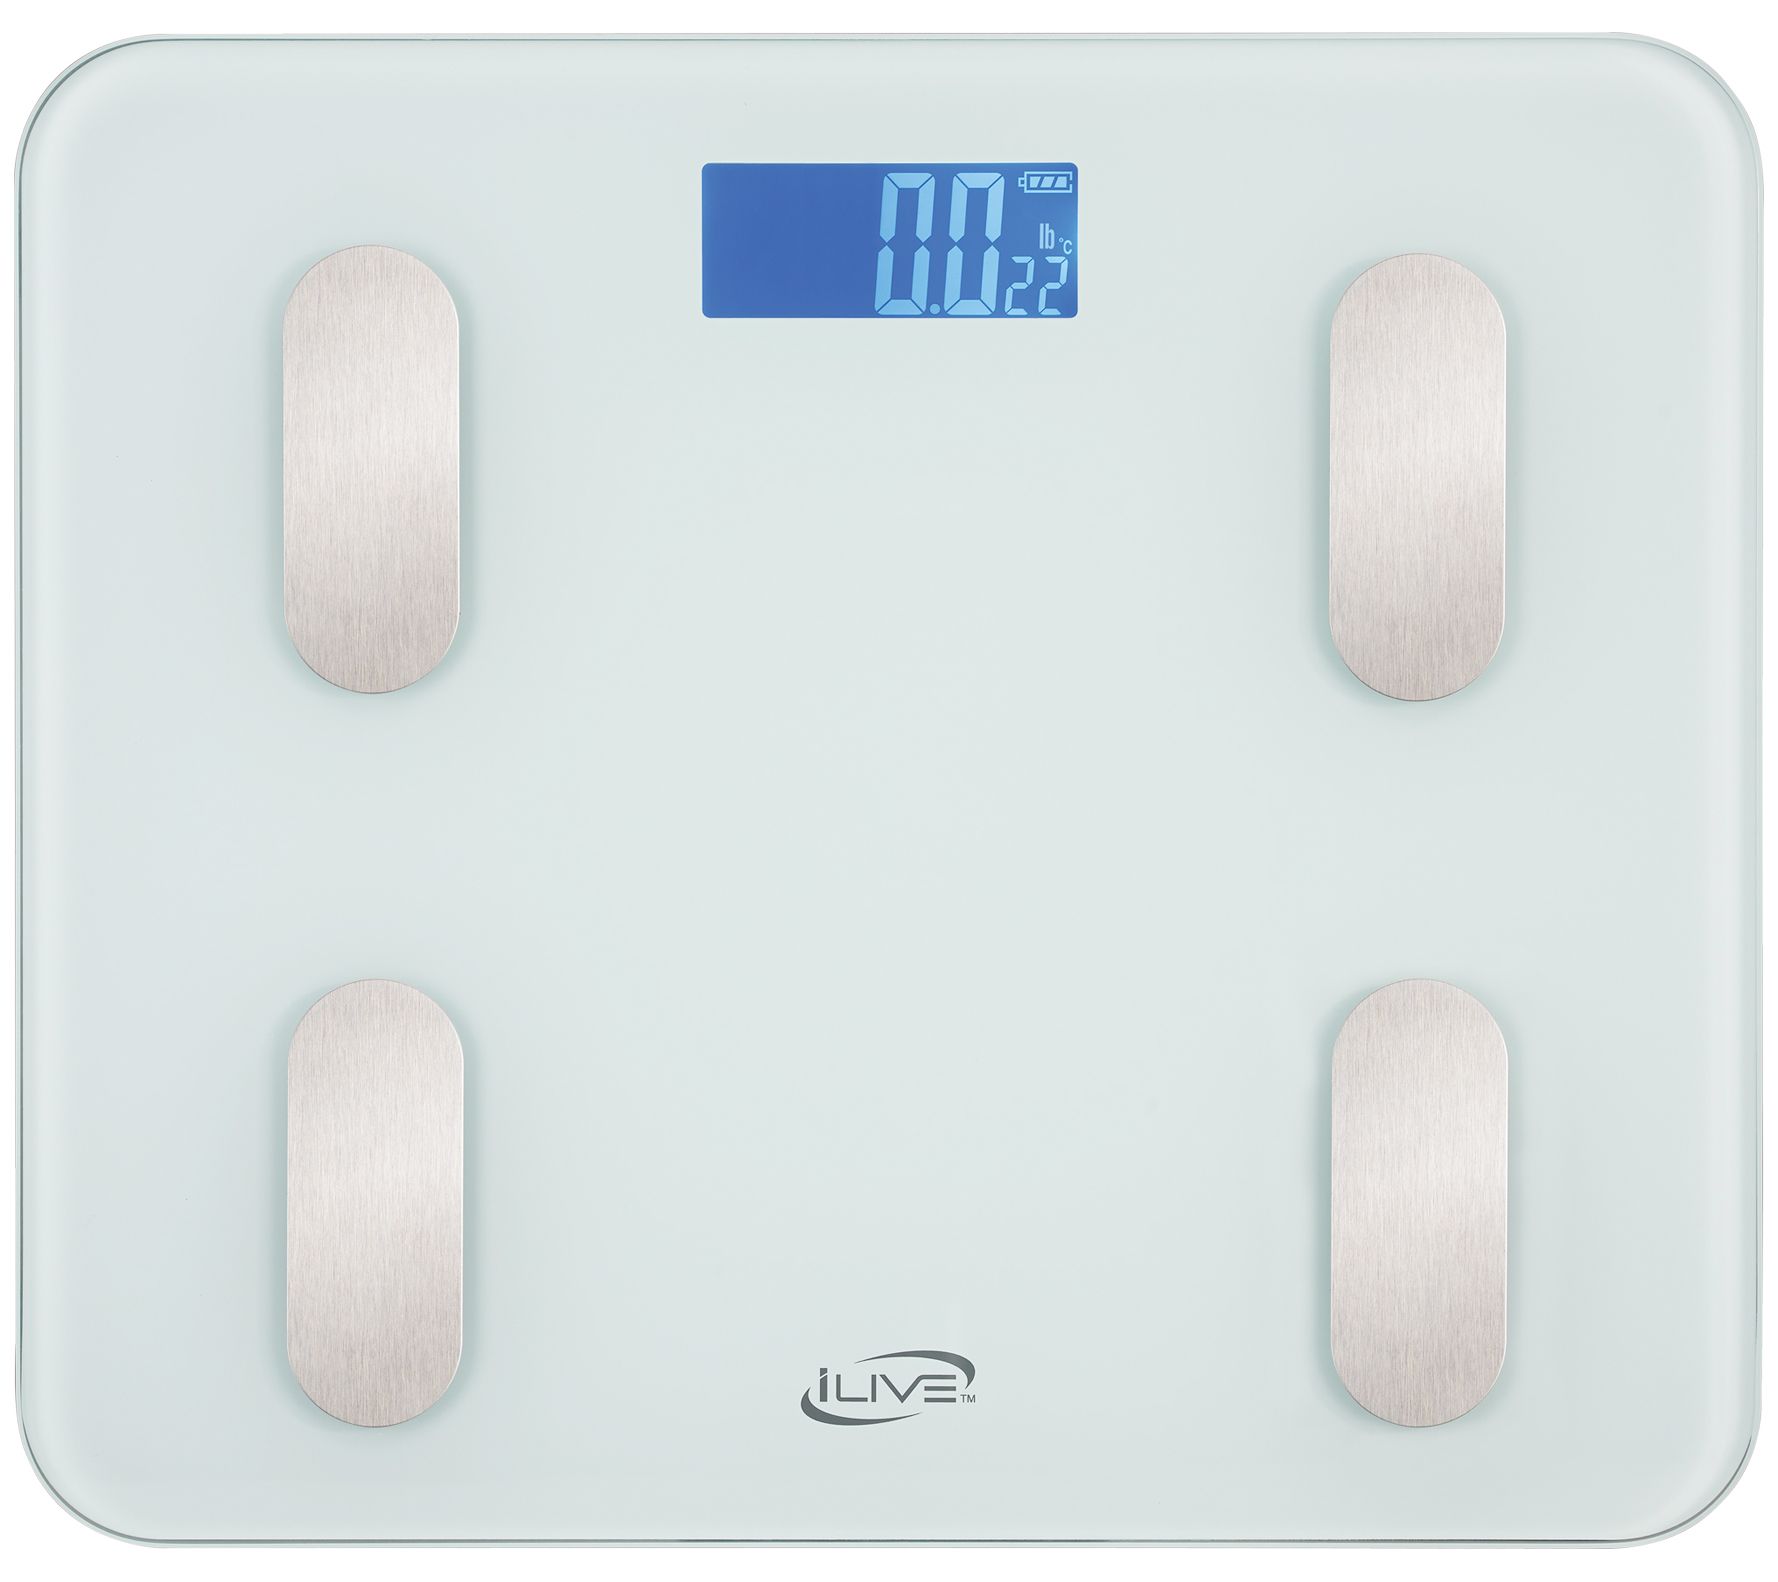 Digital Scale for Body Weight, Smart Body Fat Scale BMI Digital